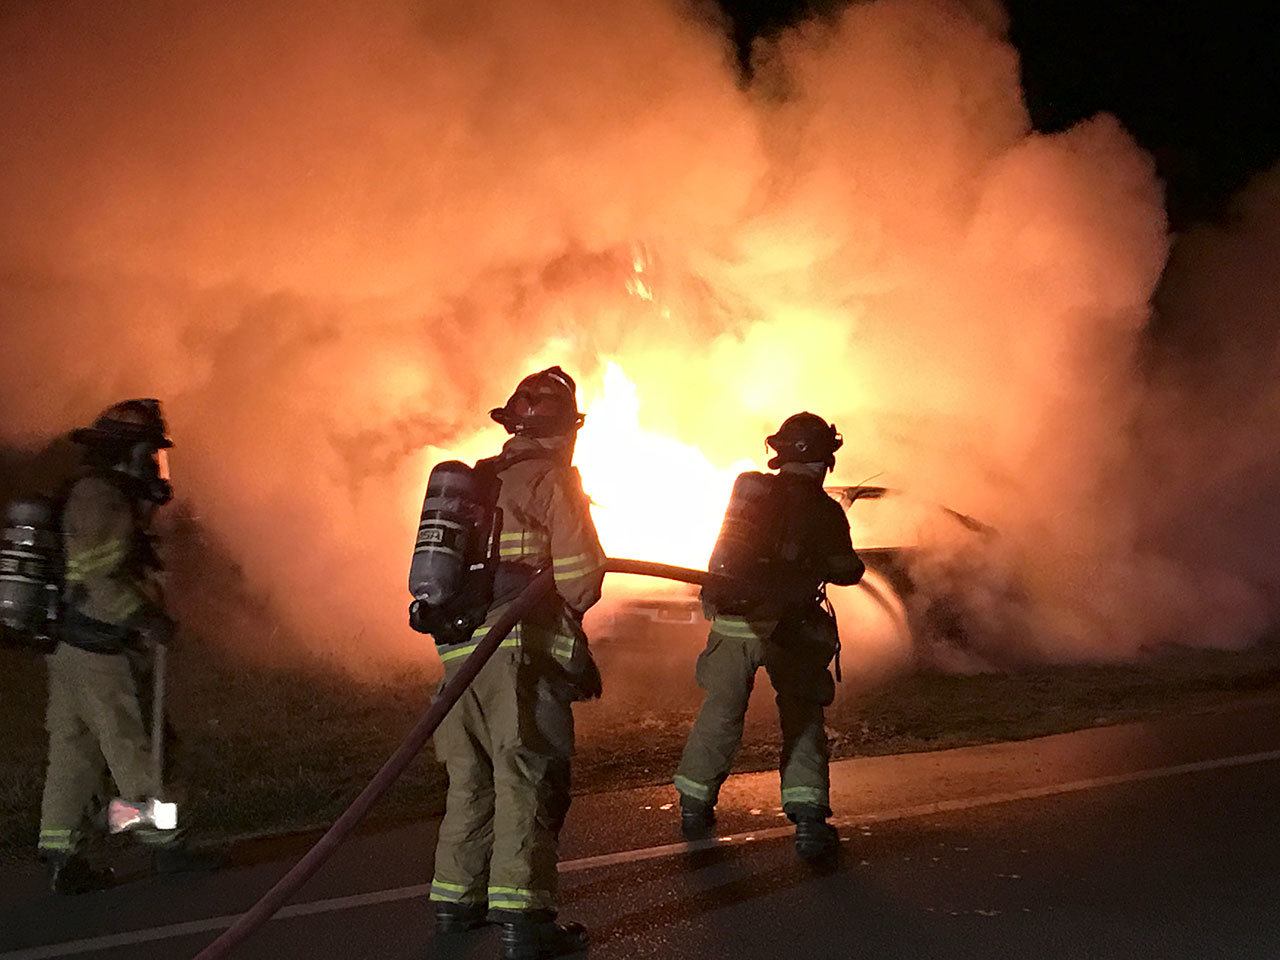 A Port Townsend man was uninjured when his car caught fire Thursday night. (Bill Beezley/East Jefferson Fire Rescue)